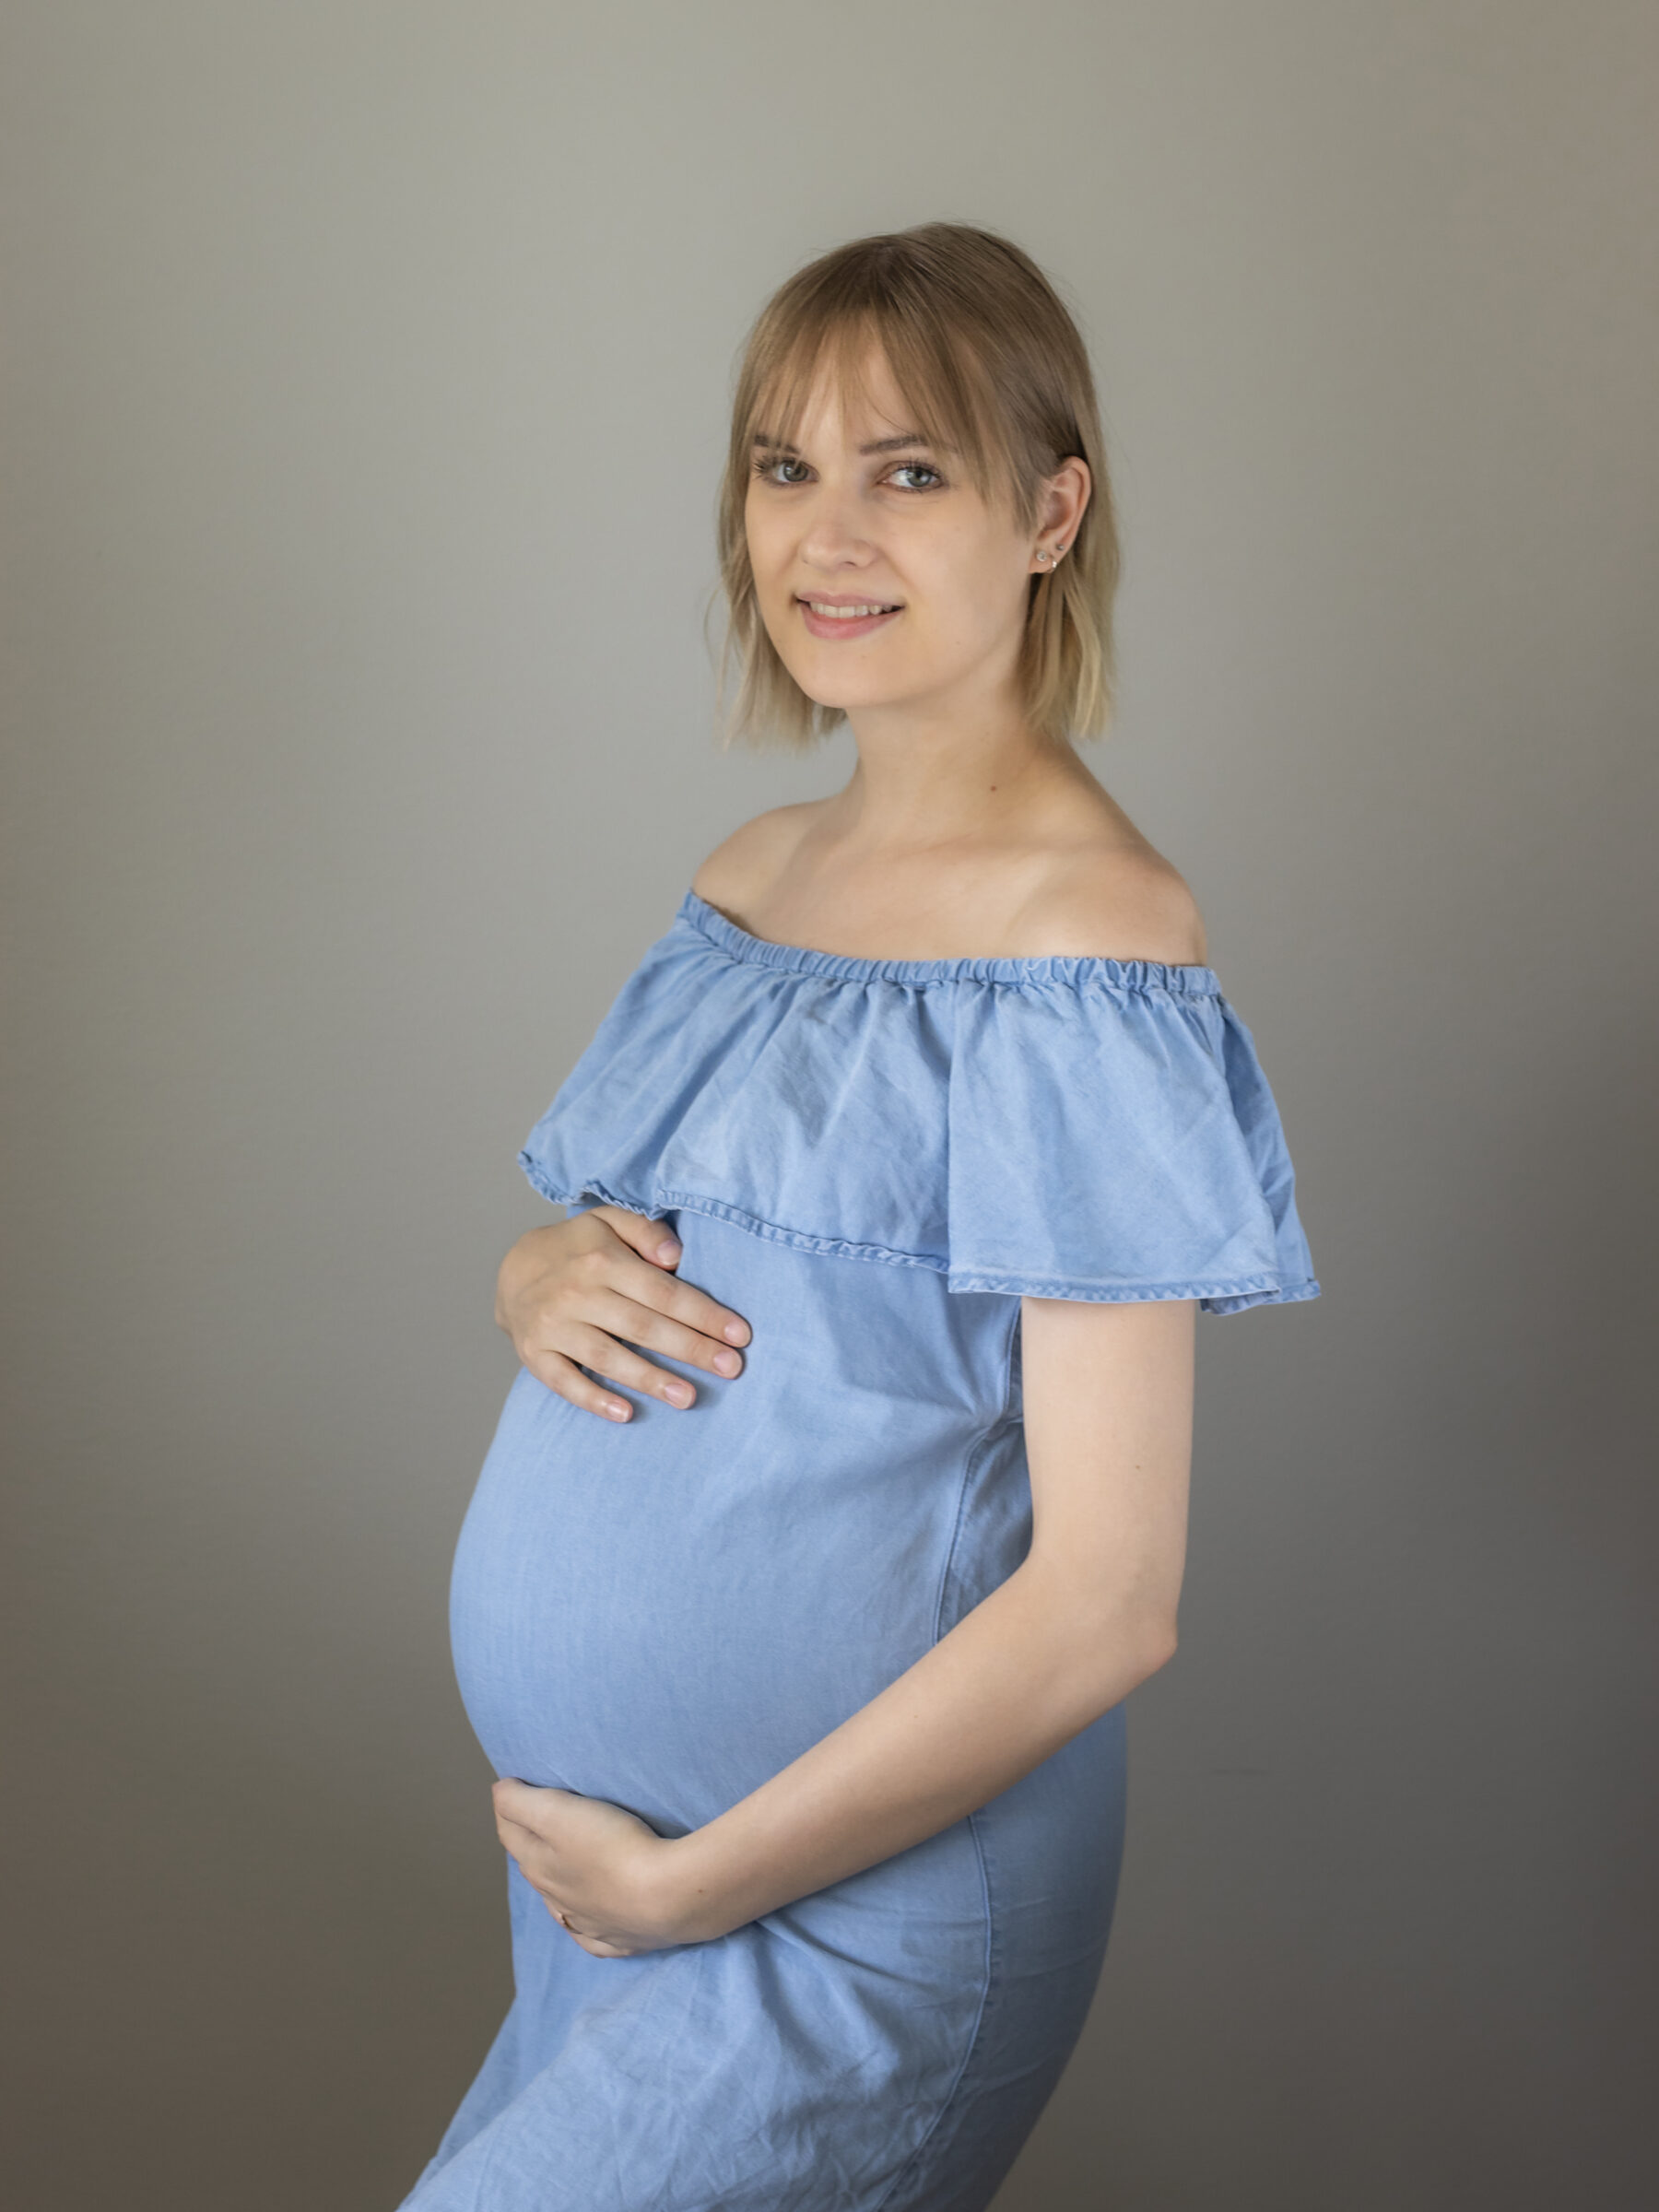 raskausajan kuva kuvaaja